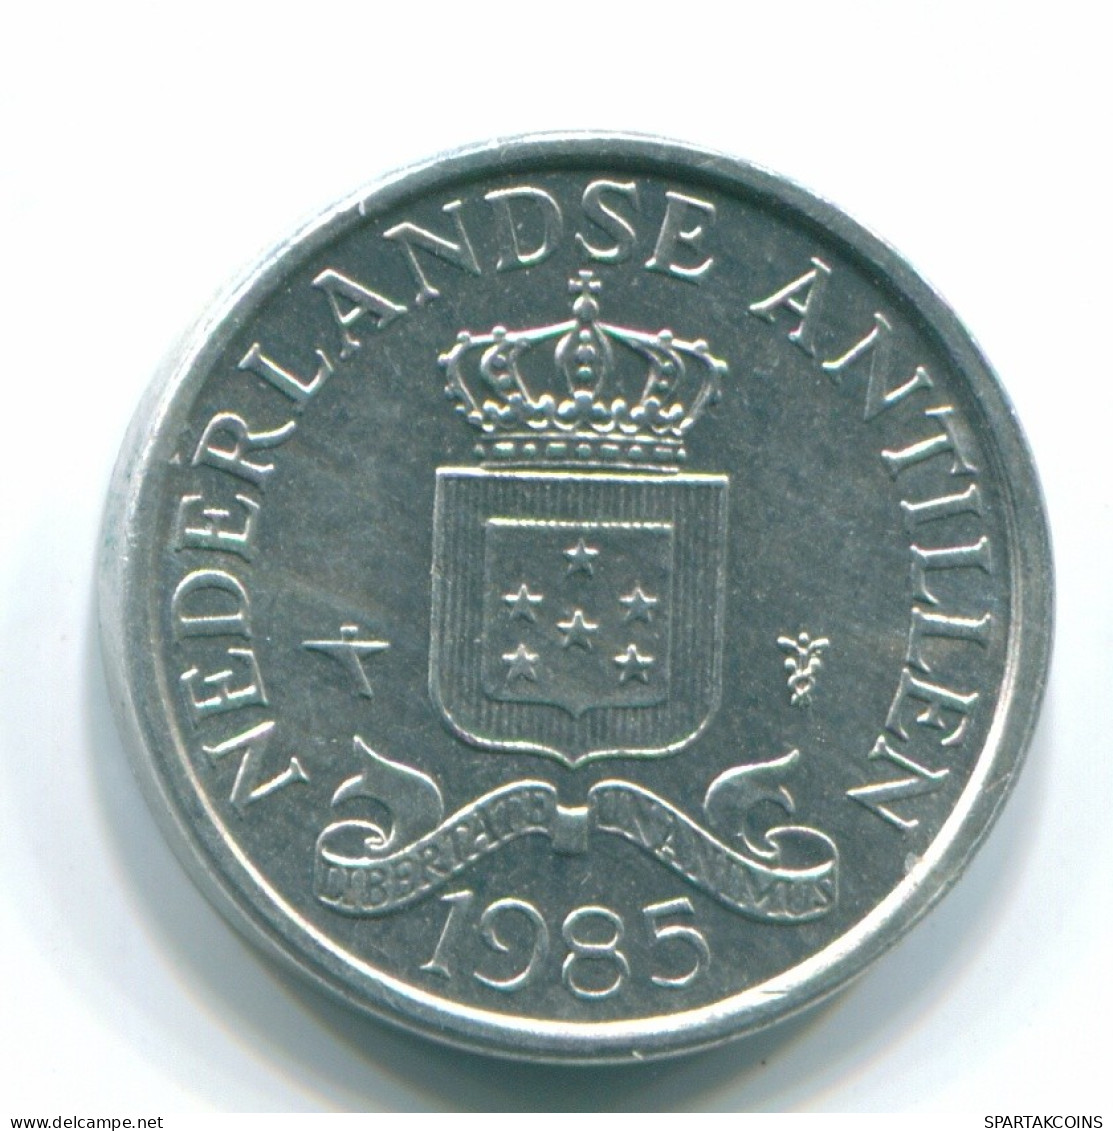 1 CENT 1985 NIEDERLÄNDISCHE ANTILLEN Aluminium Koloniale Münze #S11213.D.A - Antilles Néerlandaises